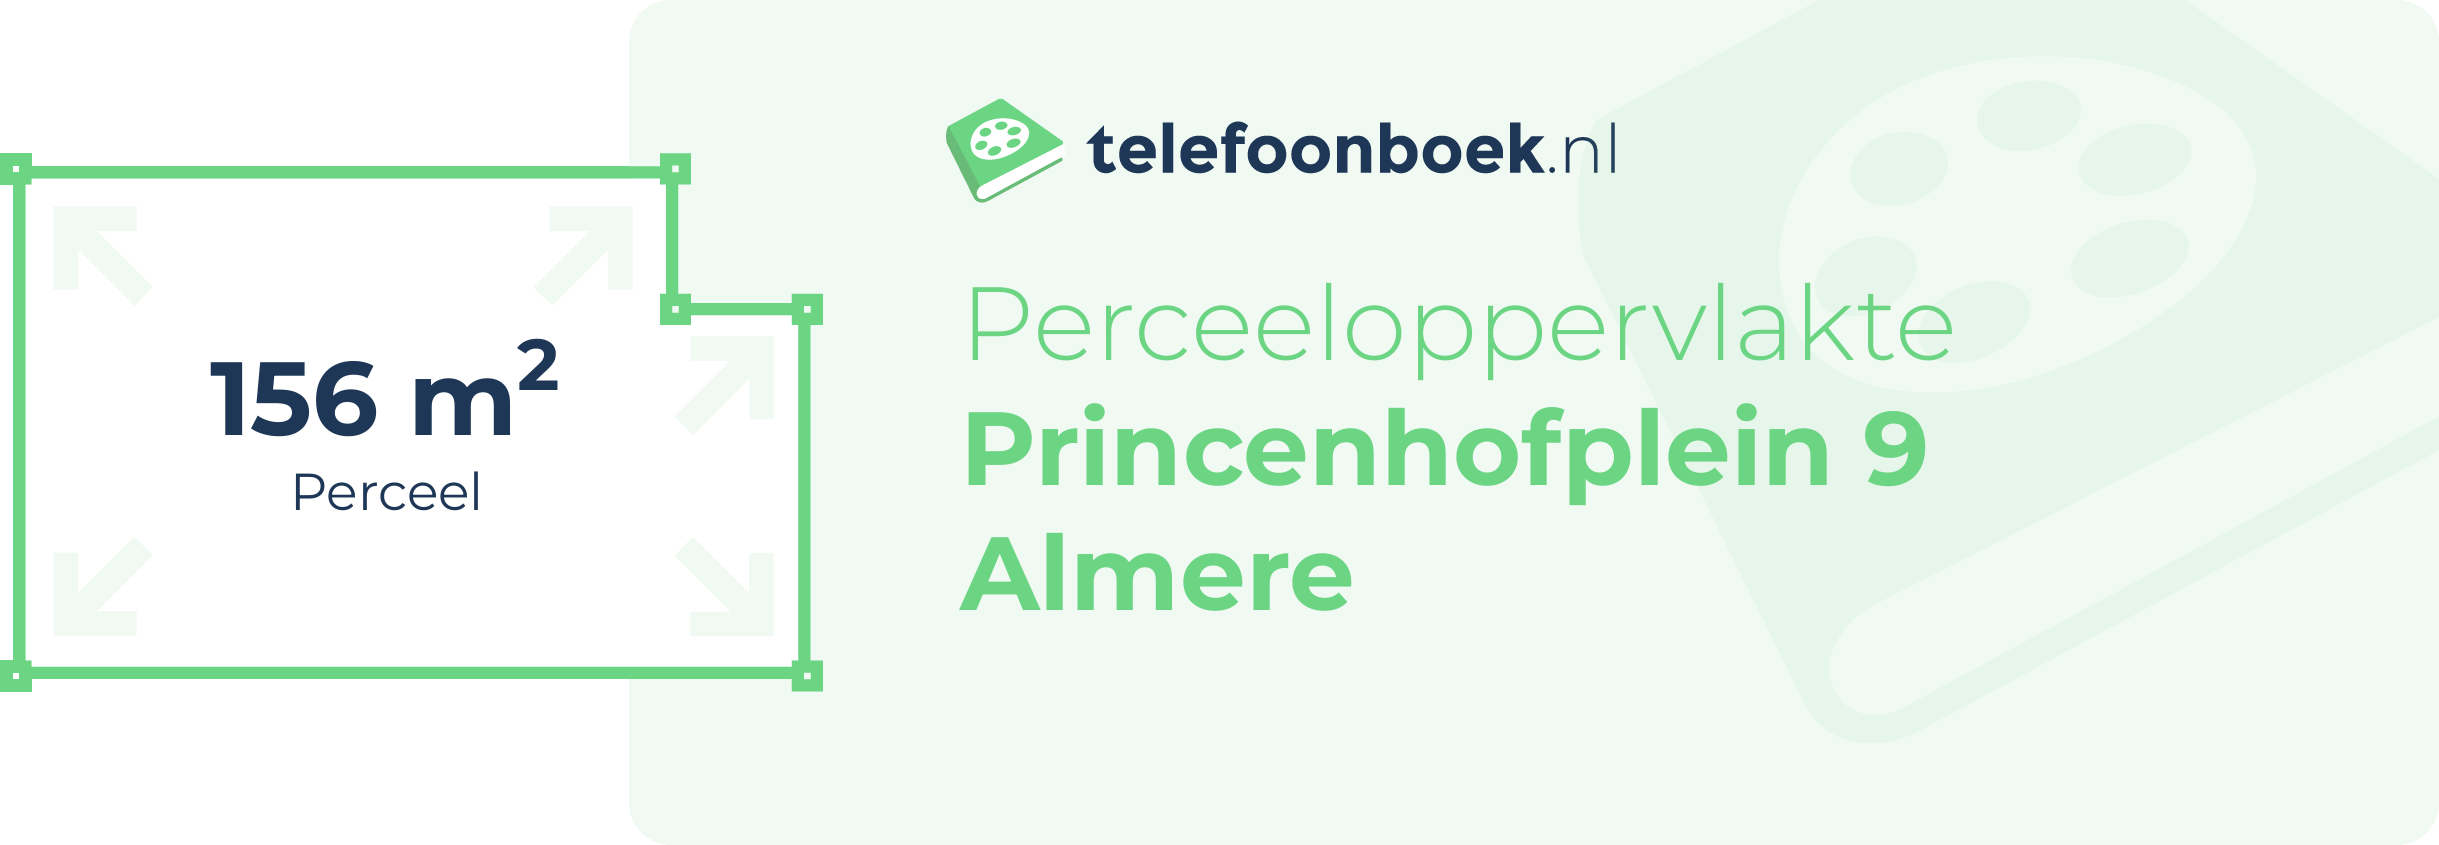 Perceeloppervlakte Princenhofplein 9 Almere